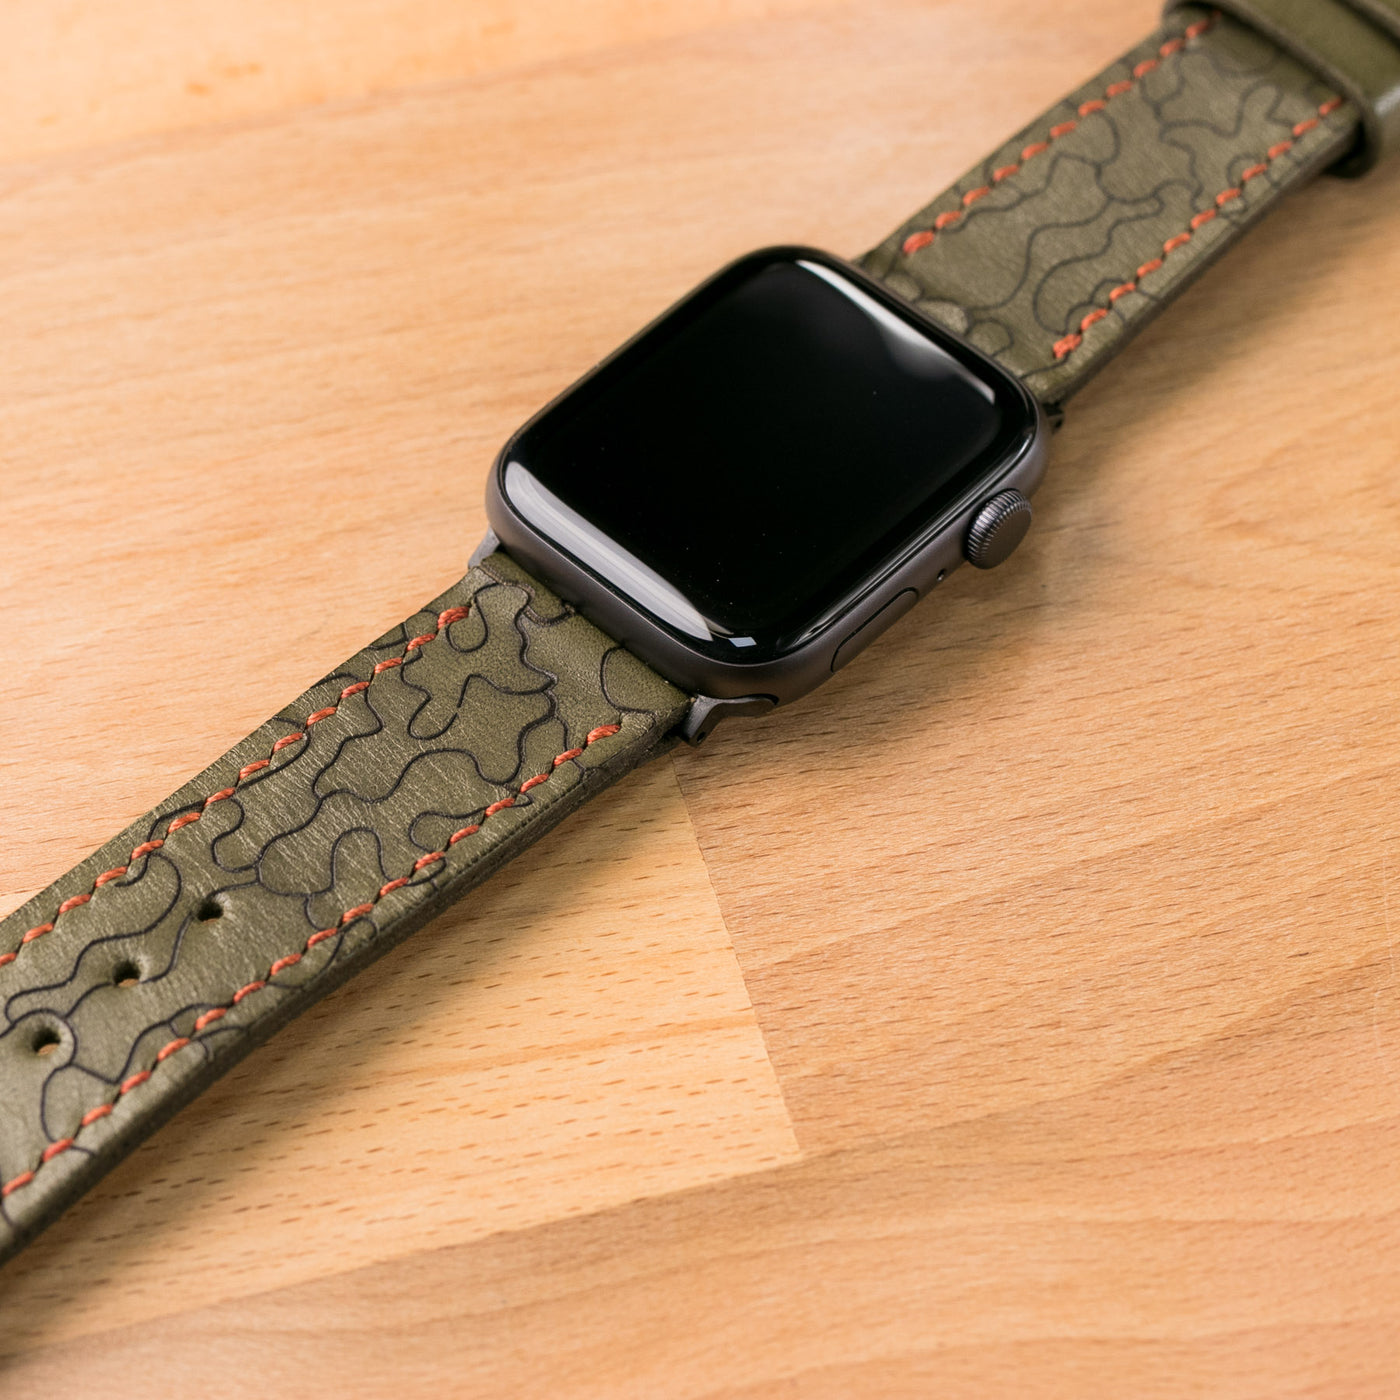 VegTan Leather Apple Watch Strap - Camouflage